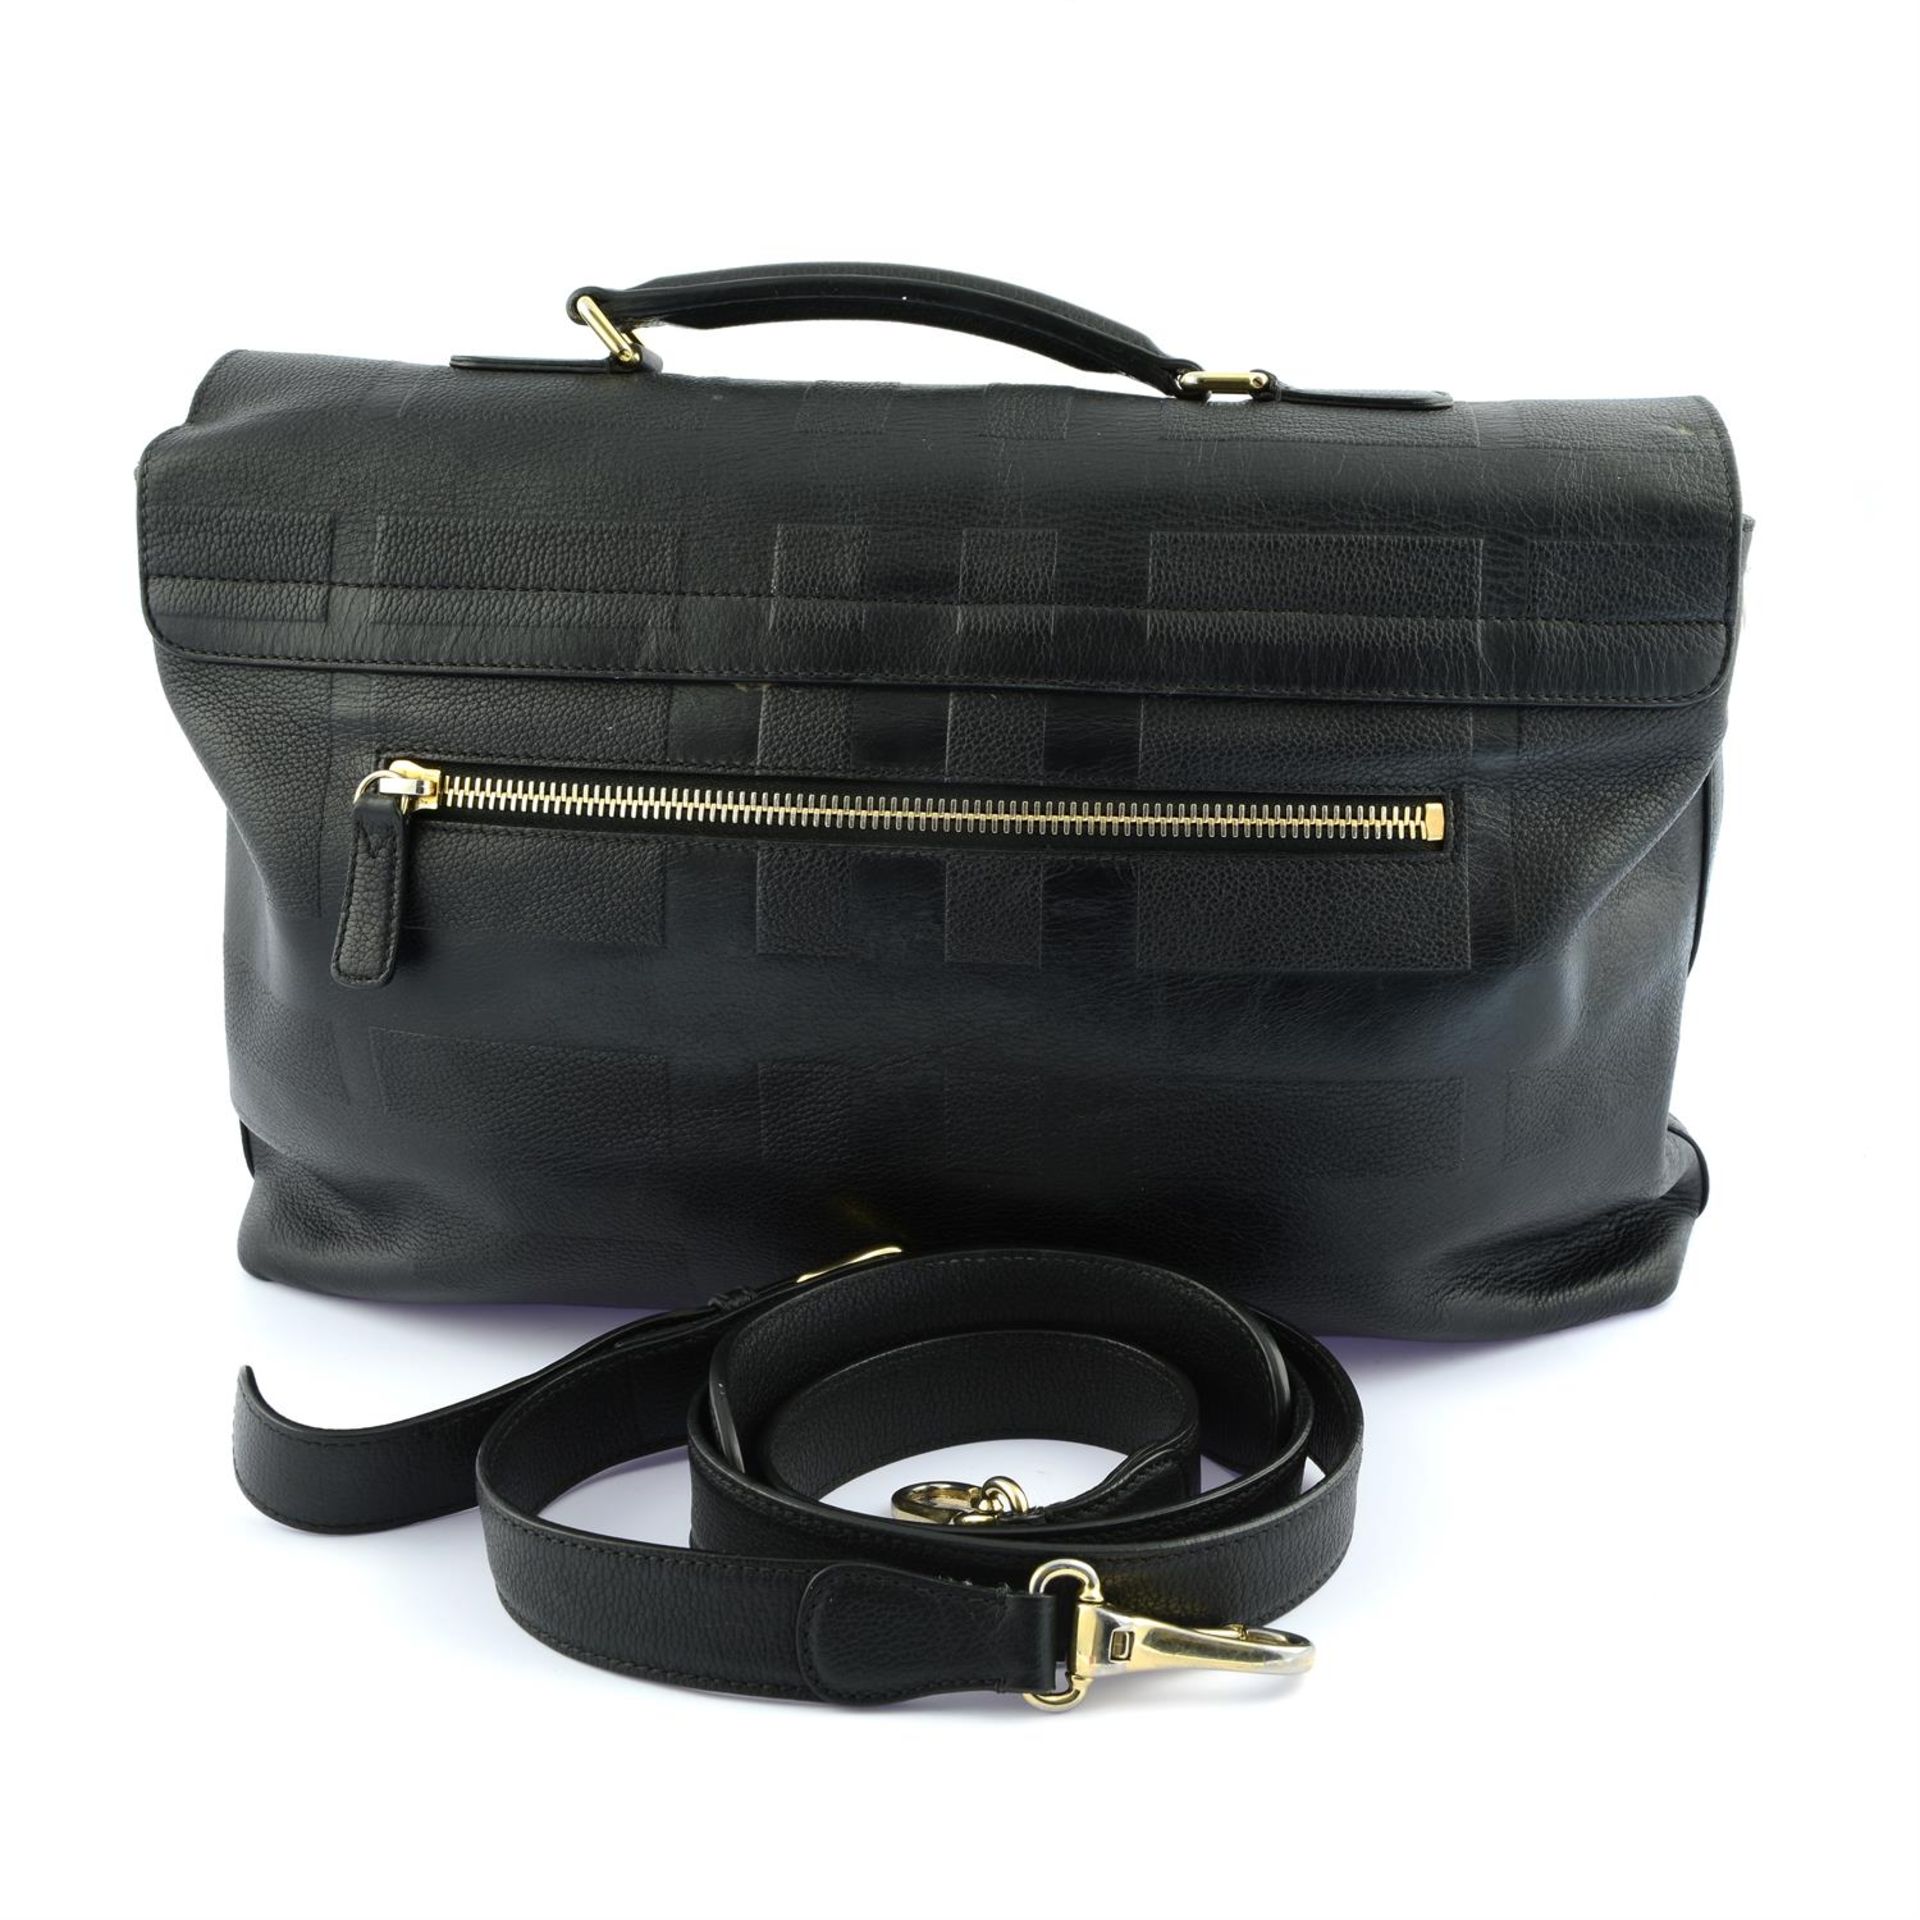 BURBERRY - a black embossed leather satchel. - Bild 2 aus 4